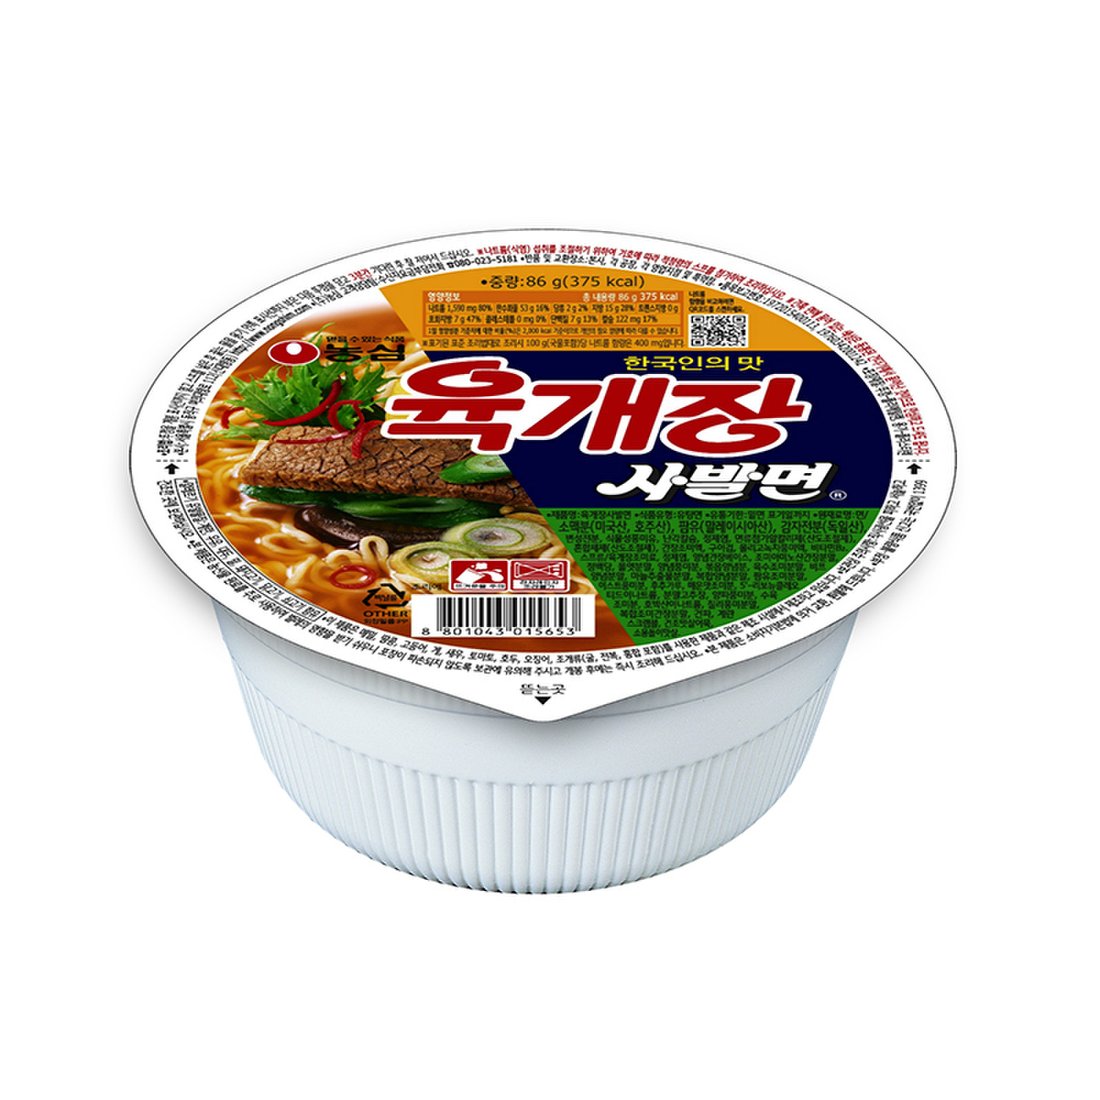 Nongshim Yukgaejang Cup Noodle Ramen 86g/농심 육개장 사발면 86g